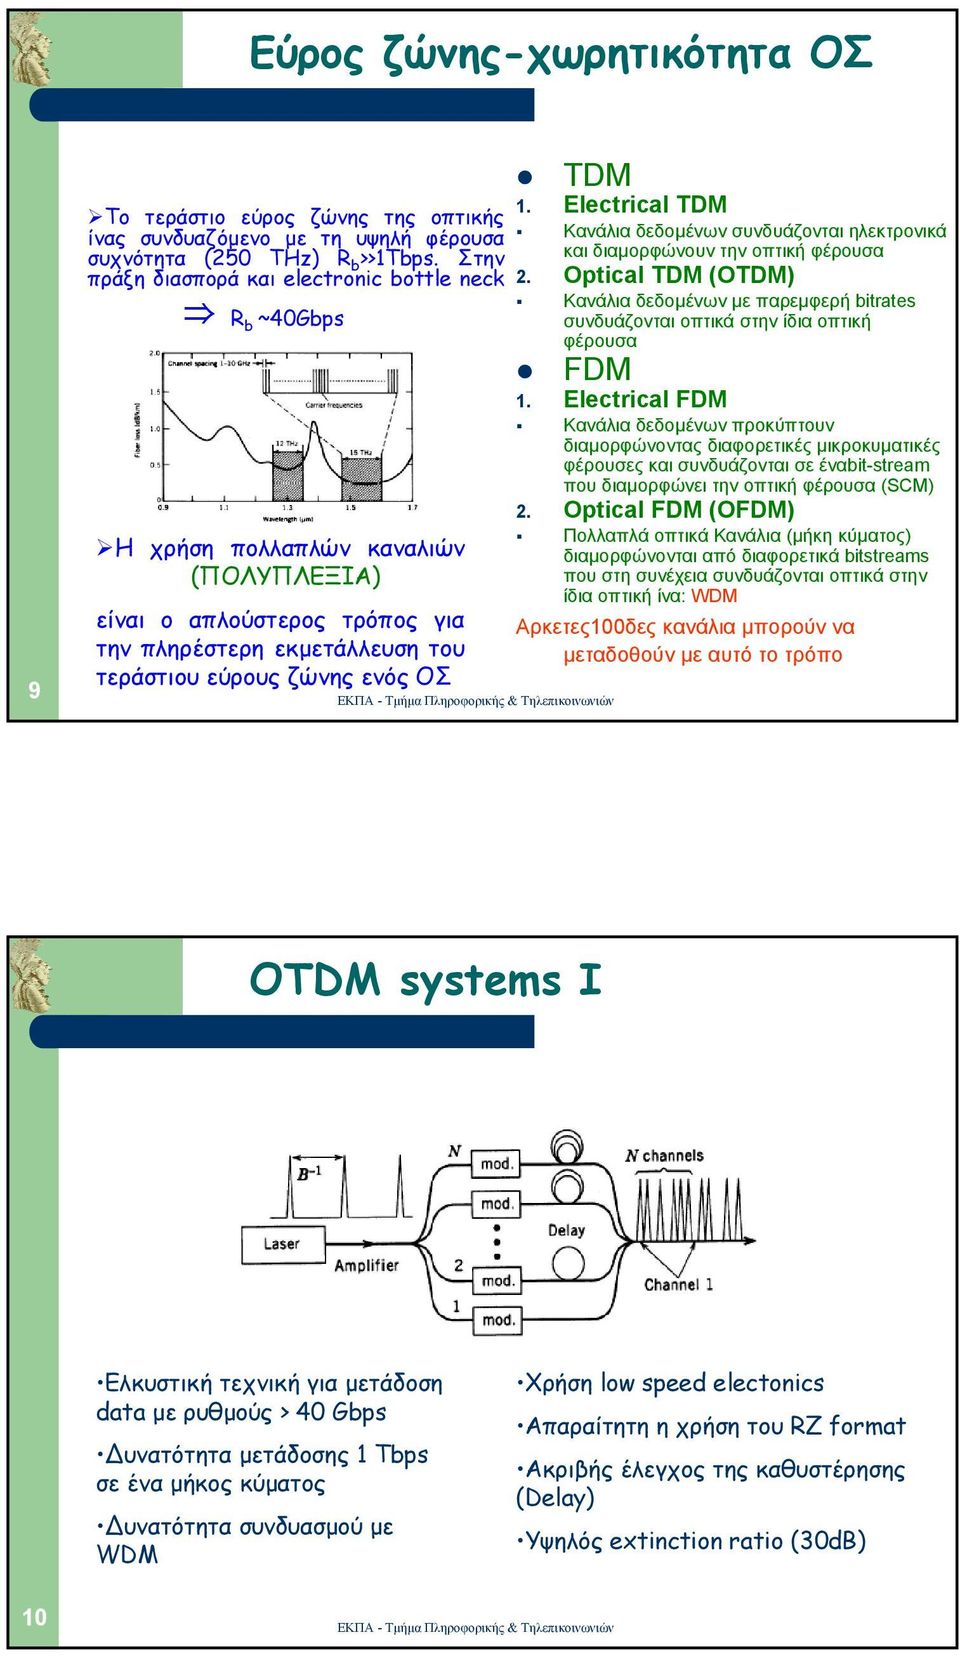 1. Electrical TDM Κανάλια δεδοµένων συνδυάζονται ηλεκτρονικά και διαµορφώνουν την οπτική φέρουσα 2.